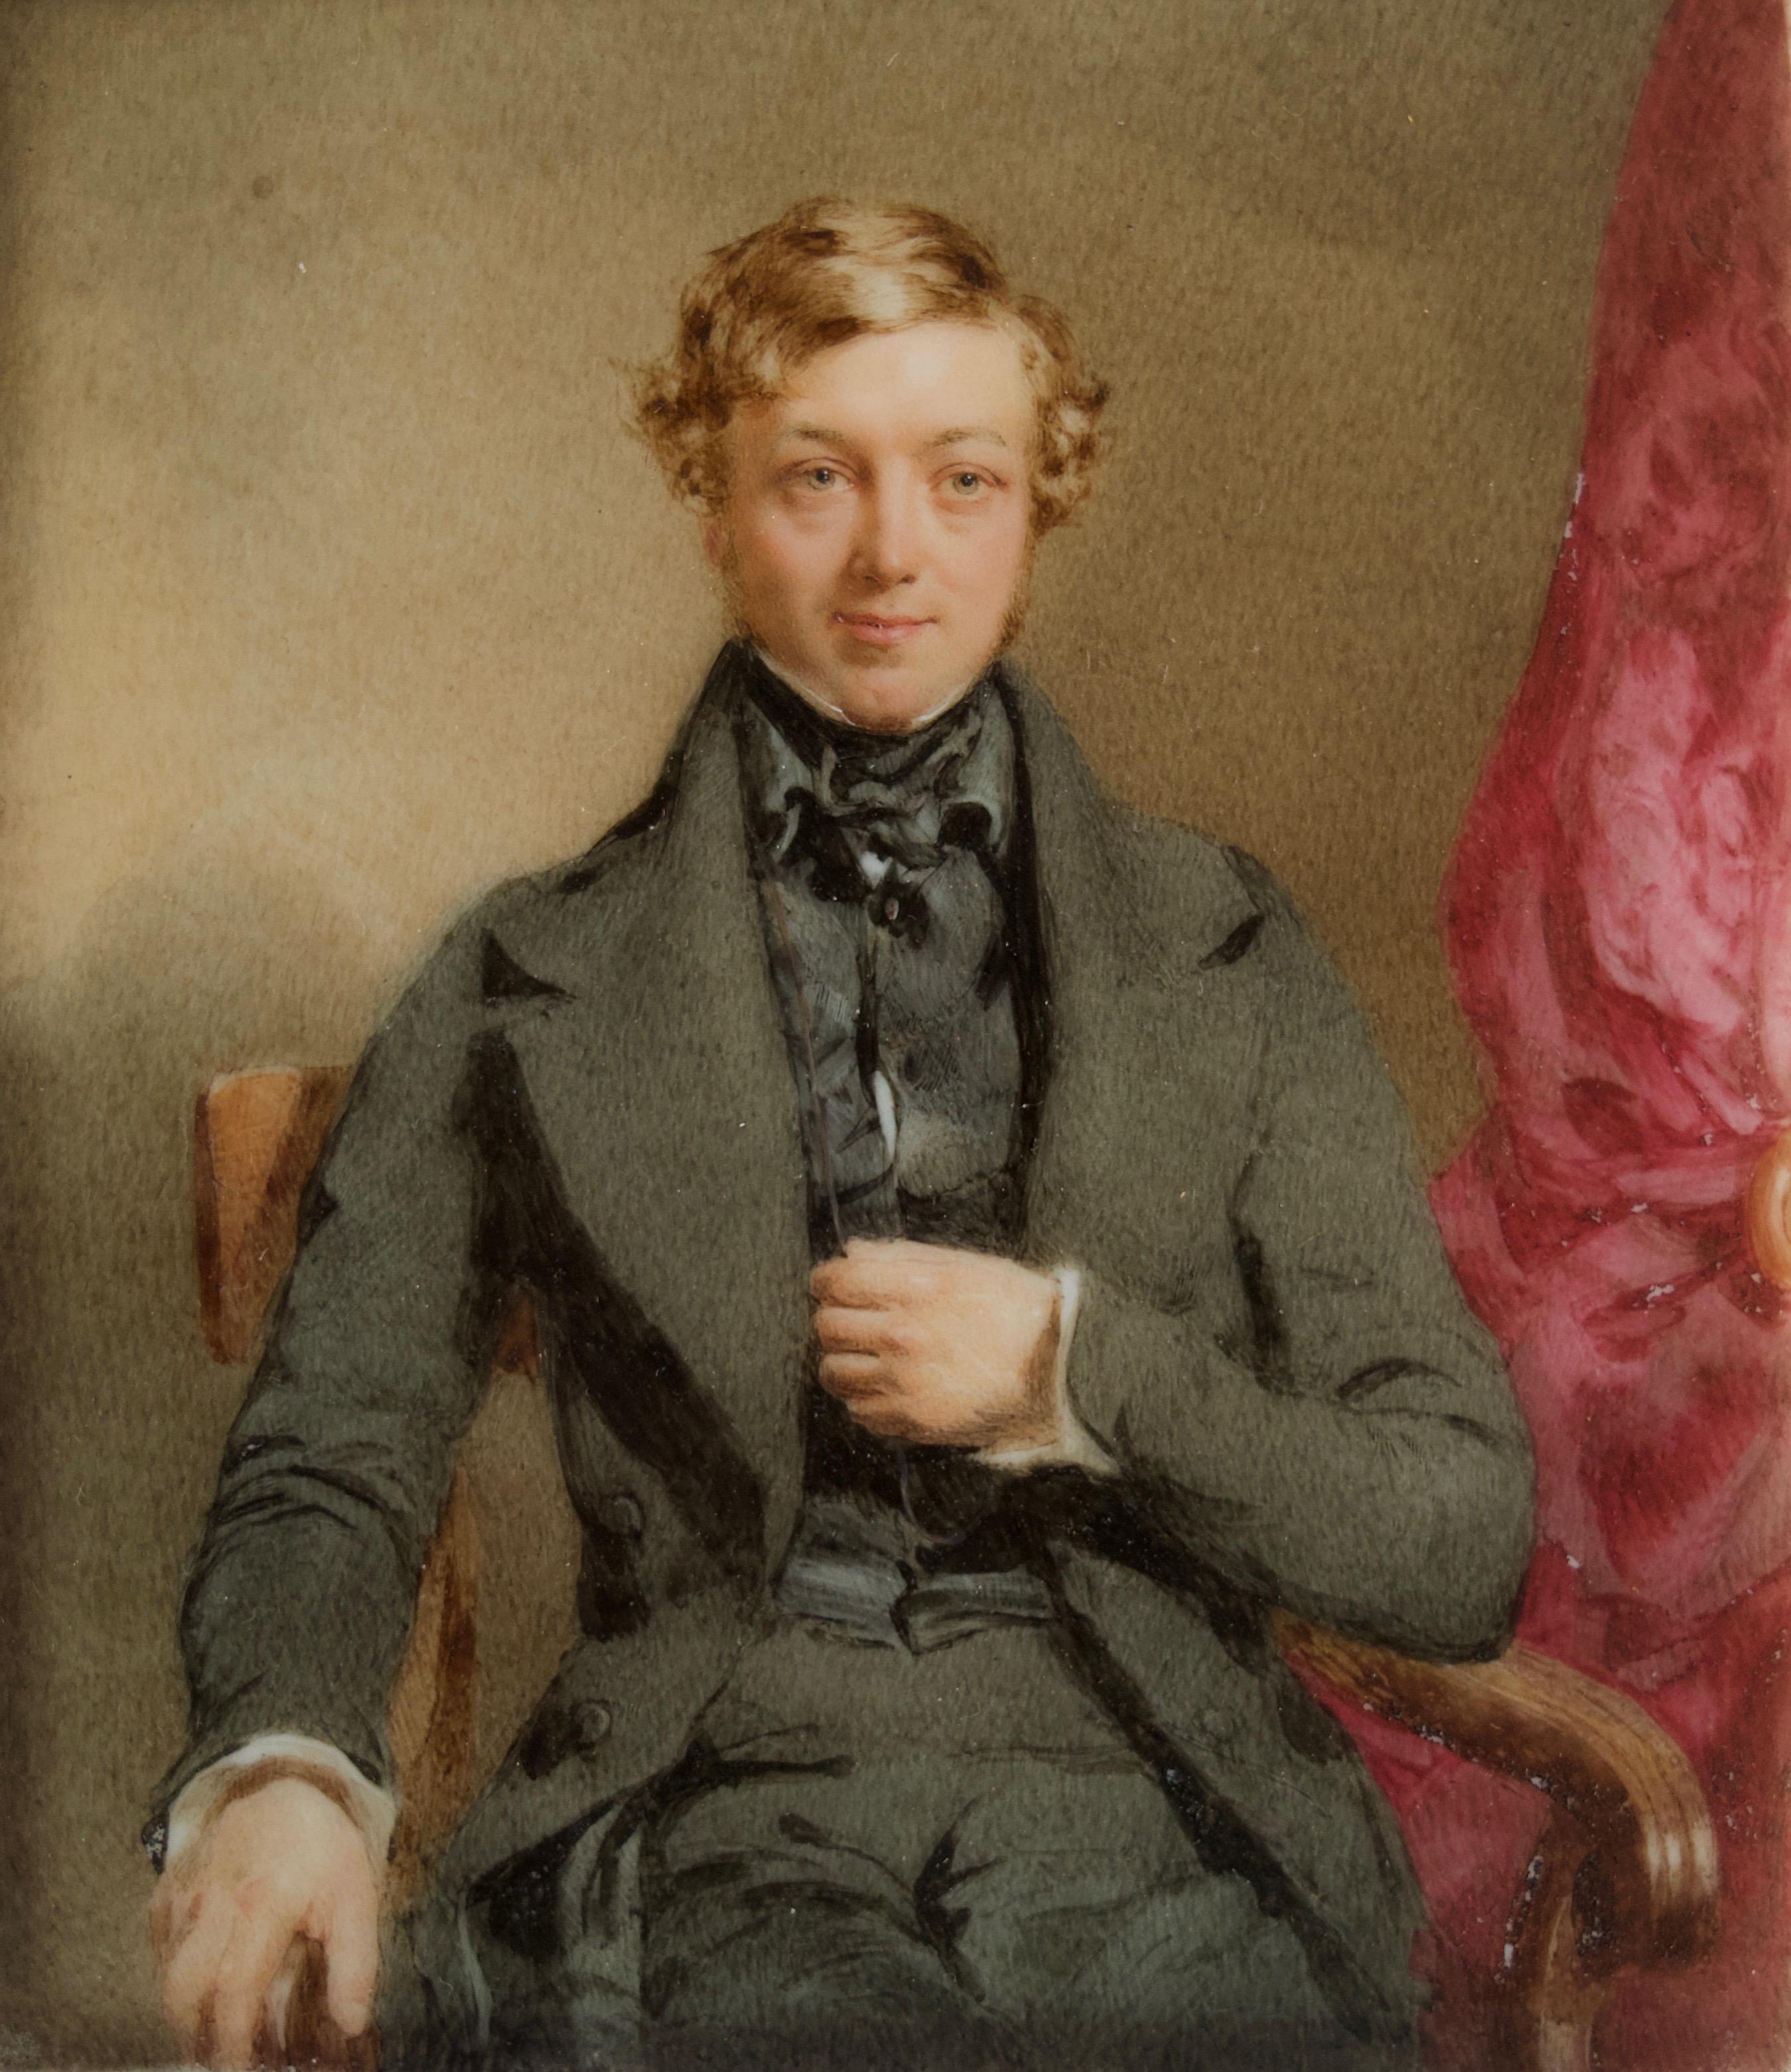 Thomas Heathfield Carrick, Miniature portrait of a young gentleman